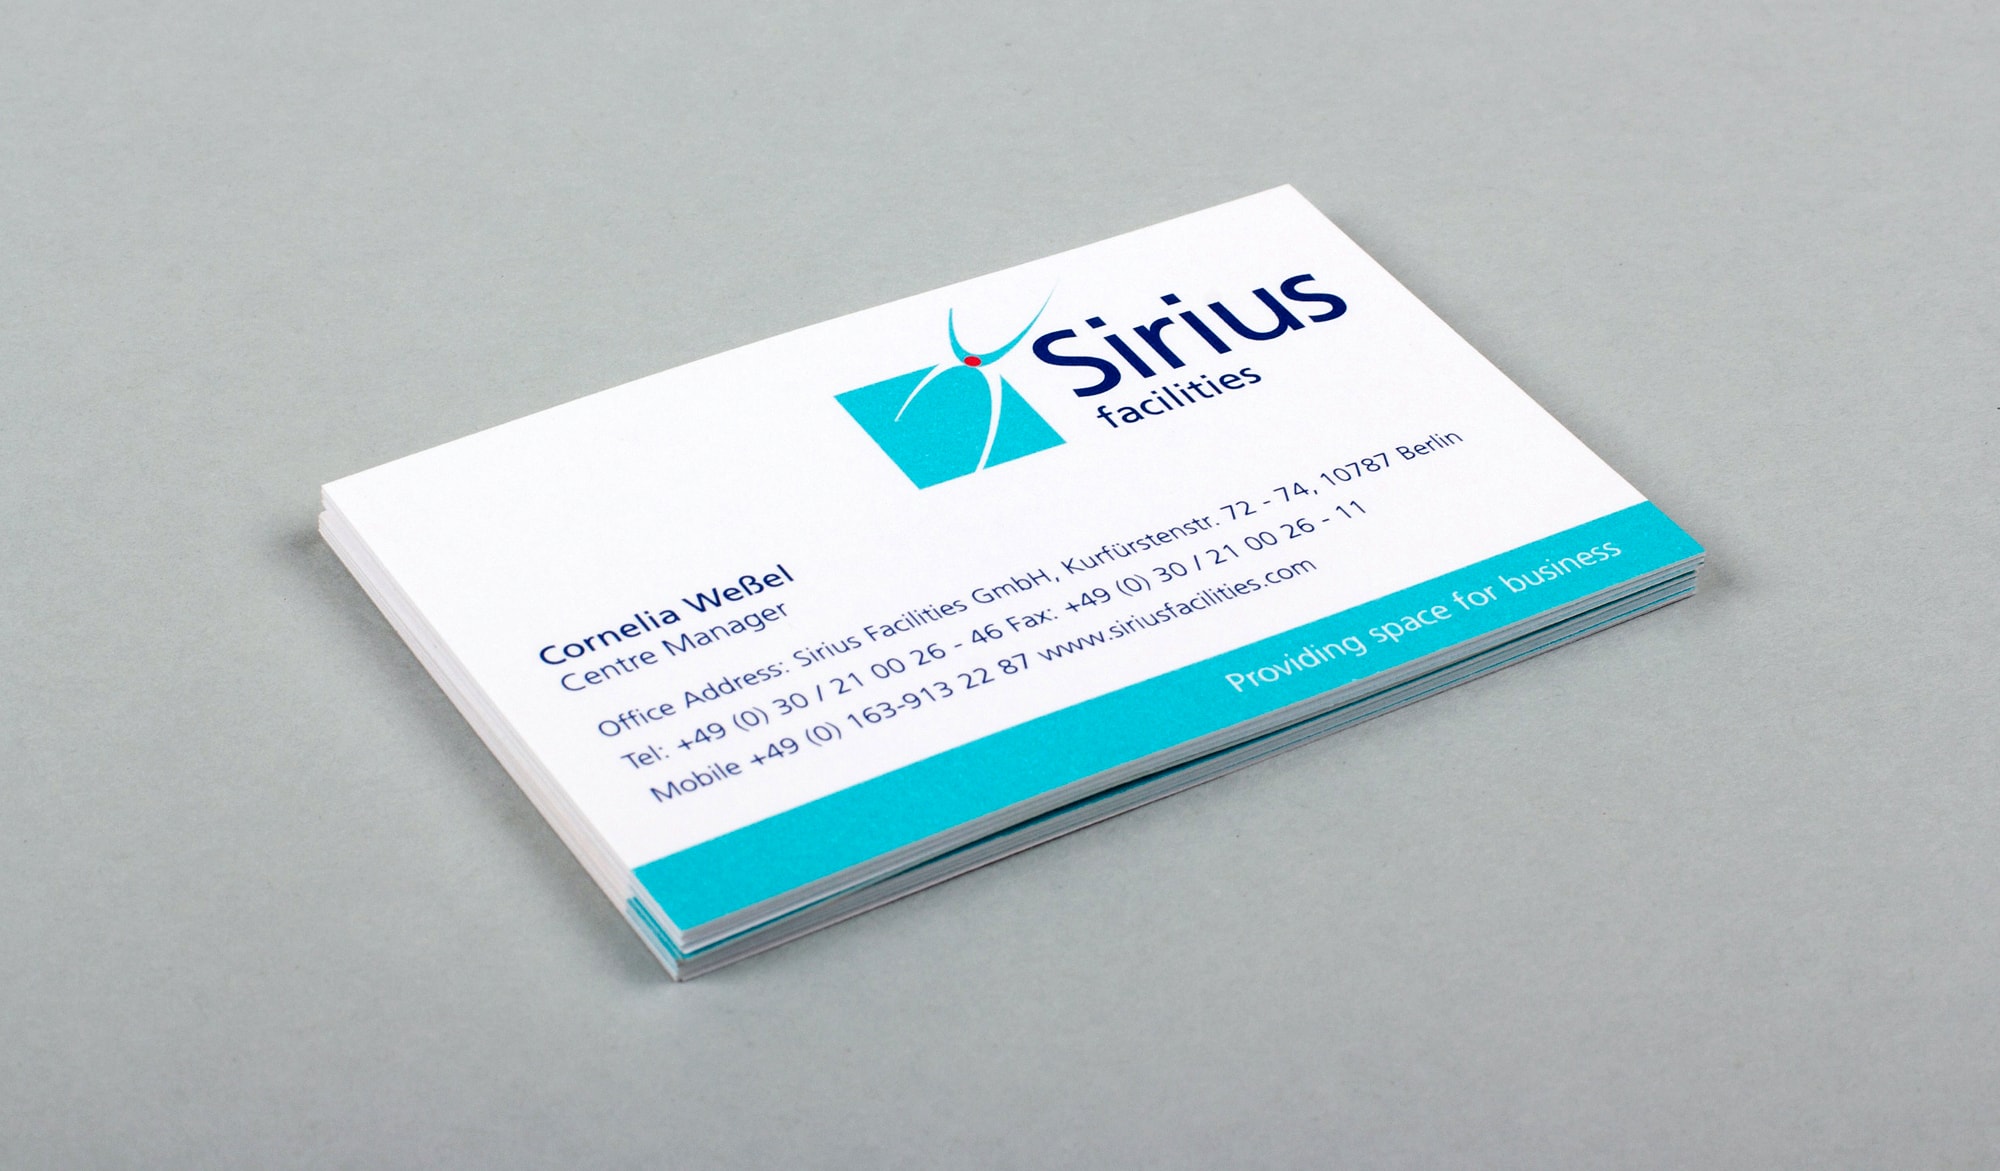 Sirius Facilities stationery - business cards